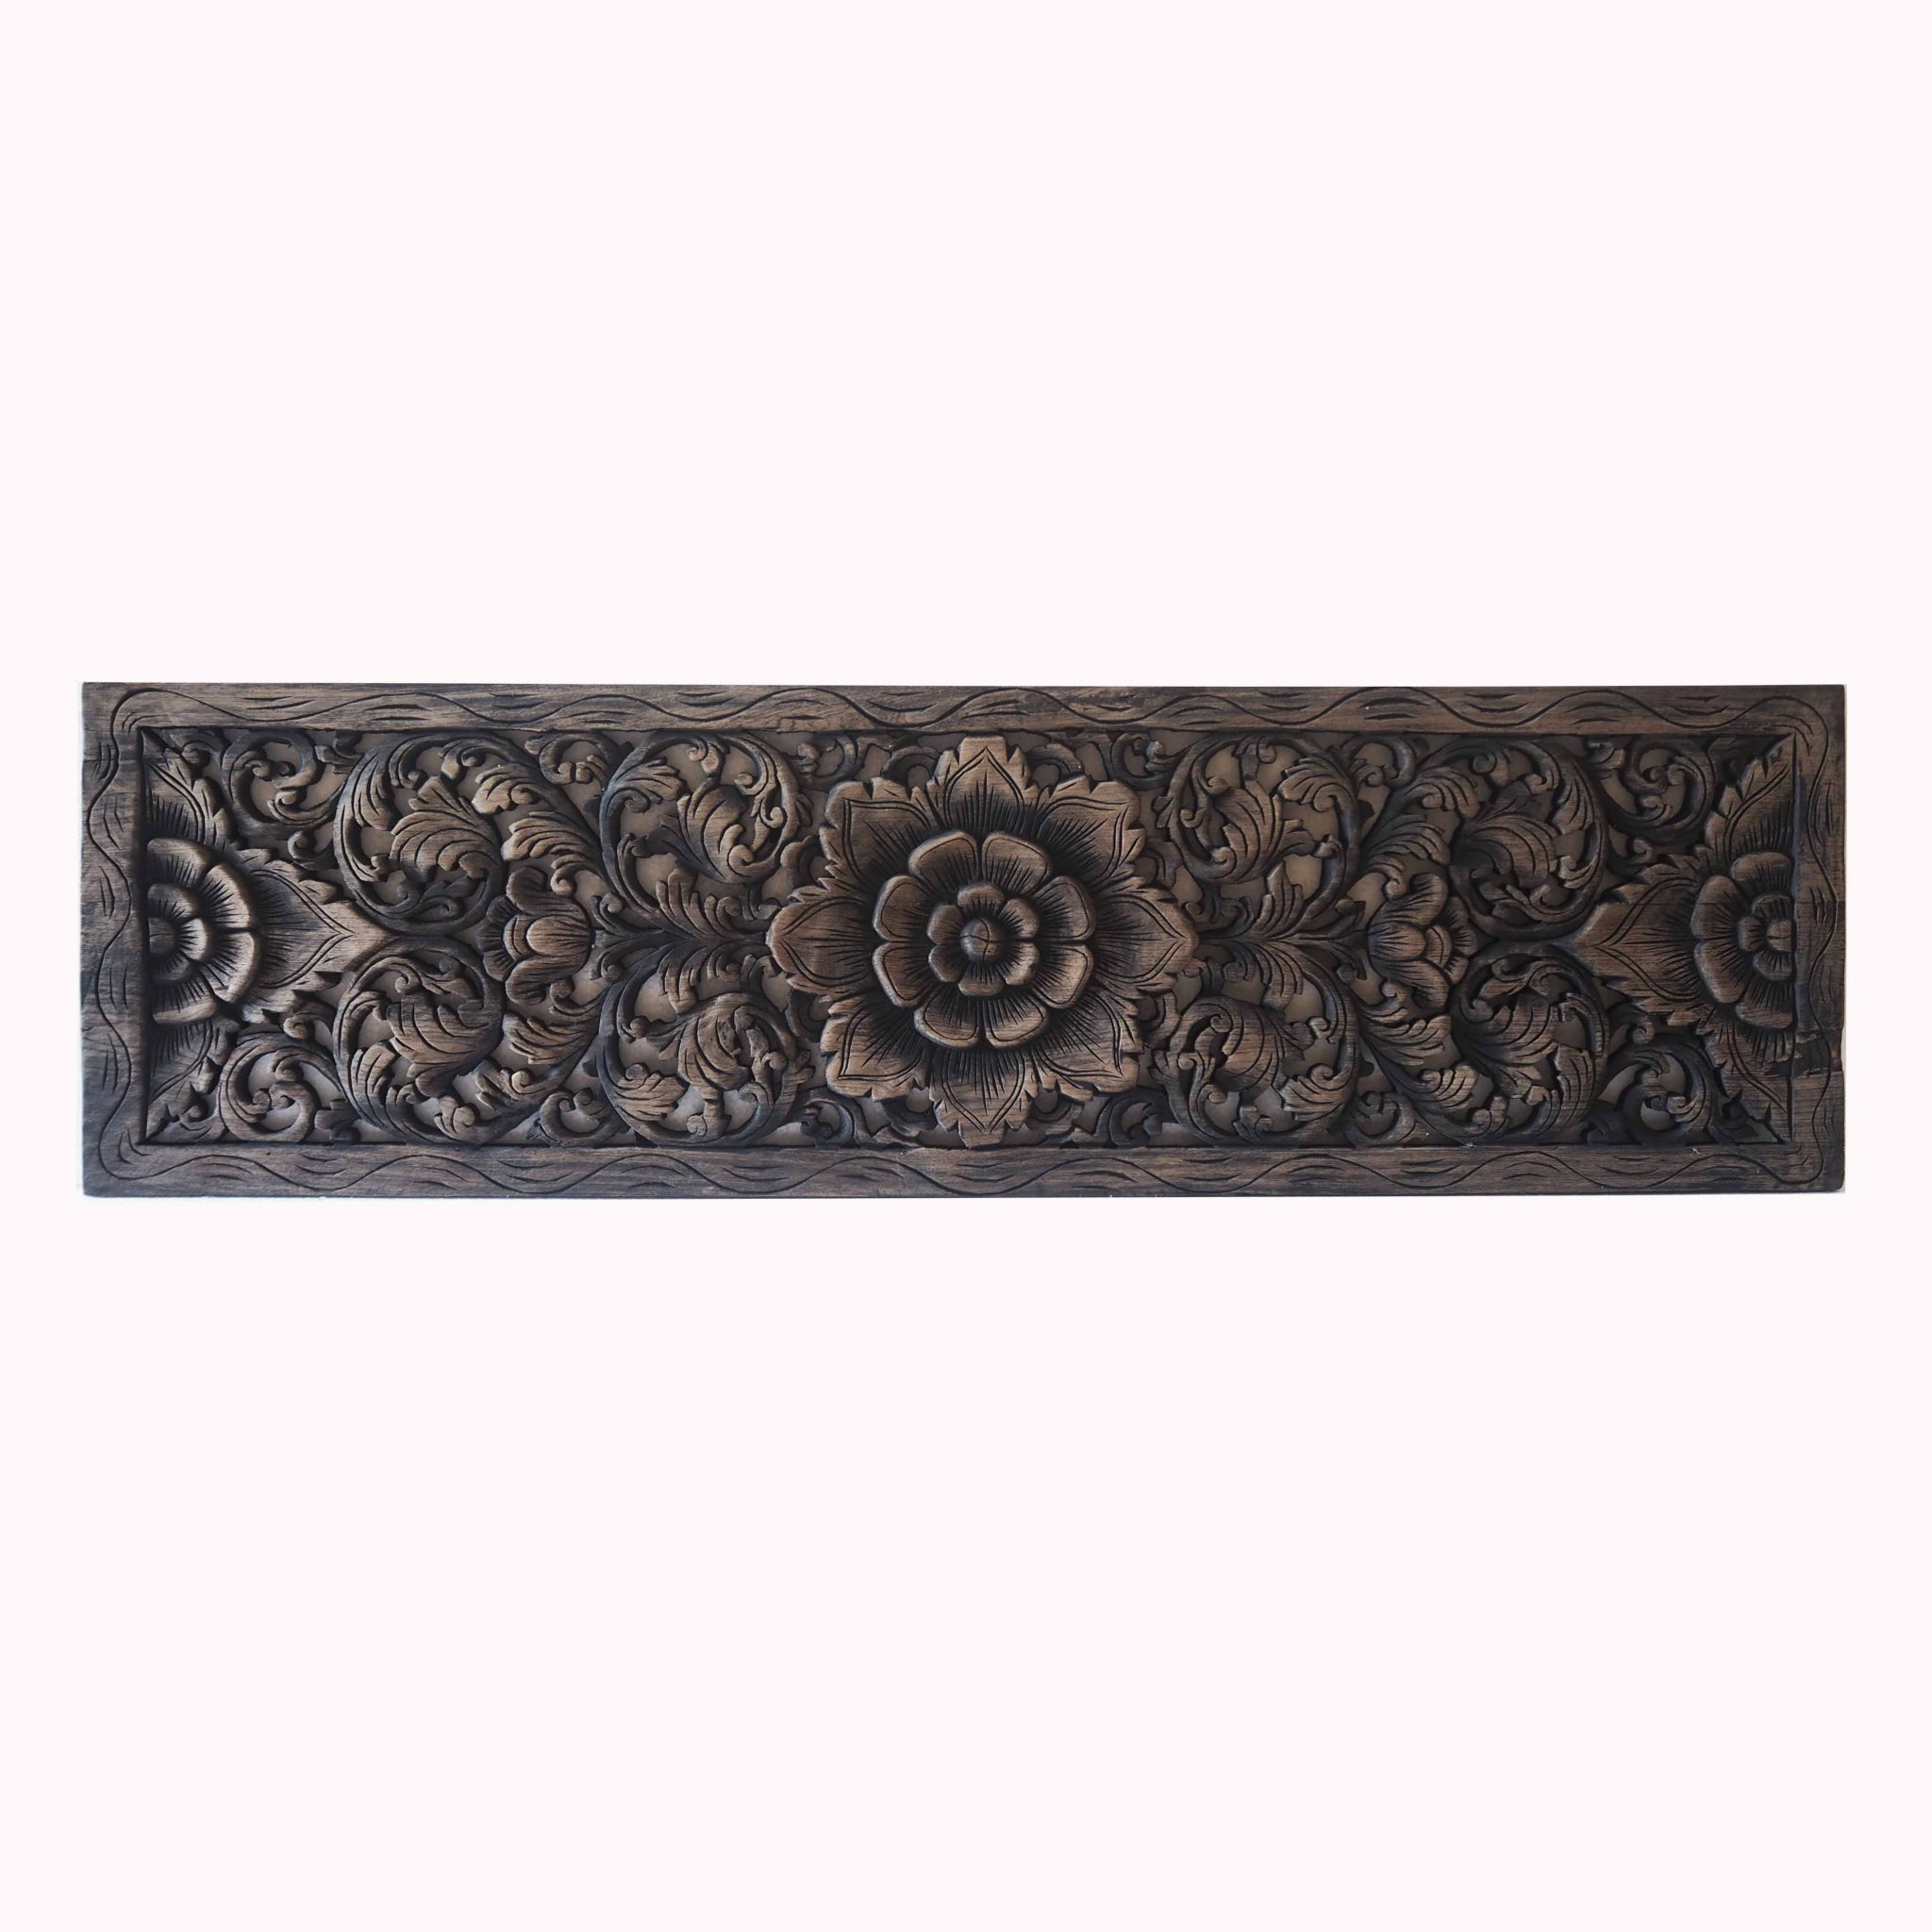 Buy Thai Lotus Wood Carving Wall Art Panel Online